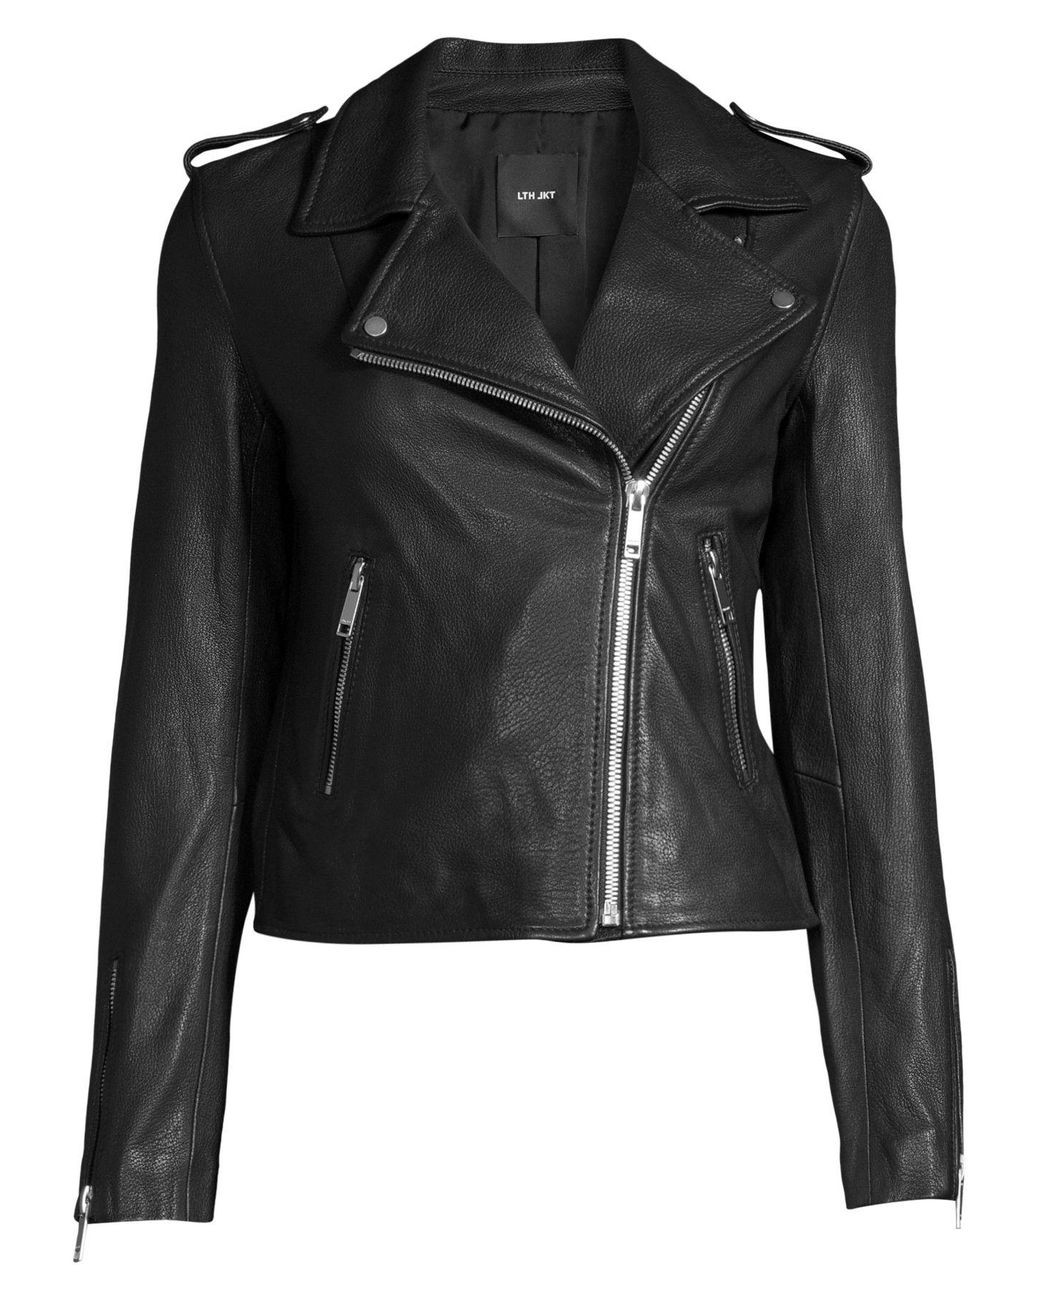 LTH JKT Kas Modern Leather Biker Jacket in Black - Lyst